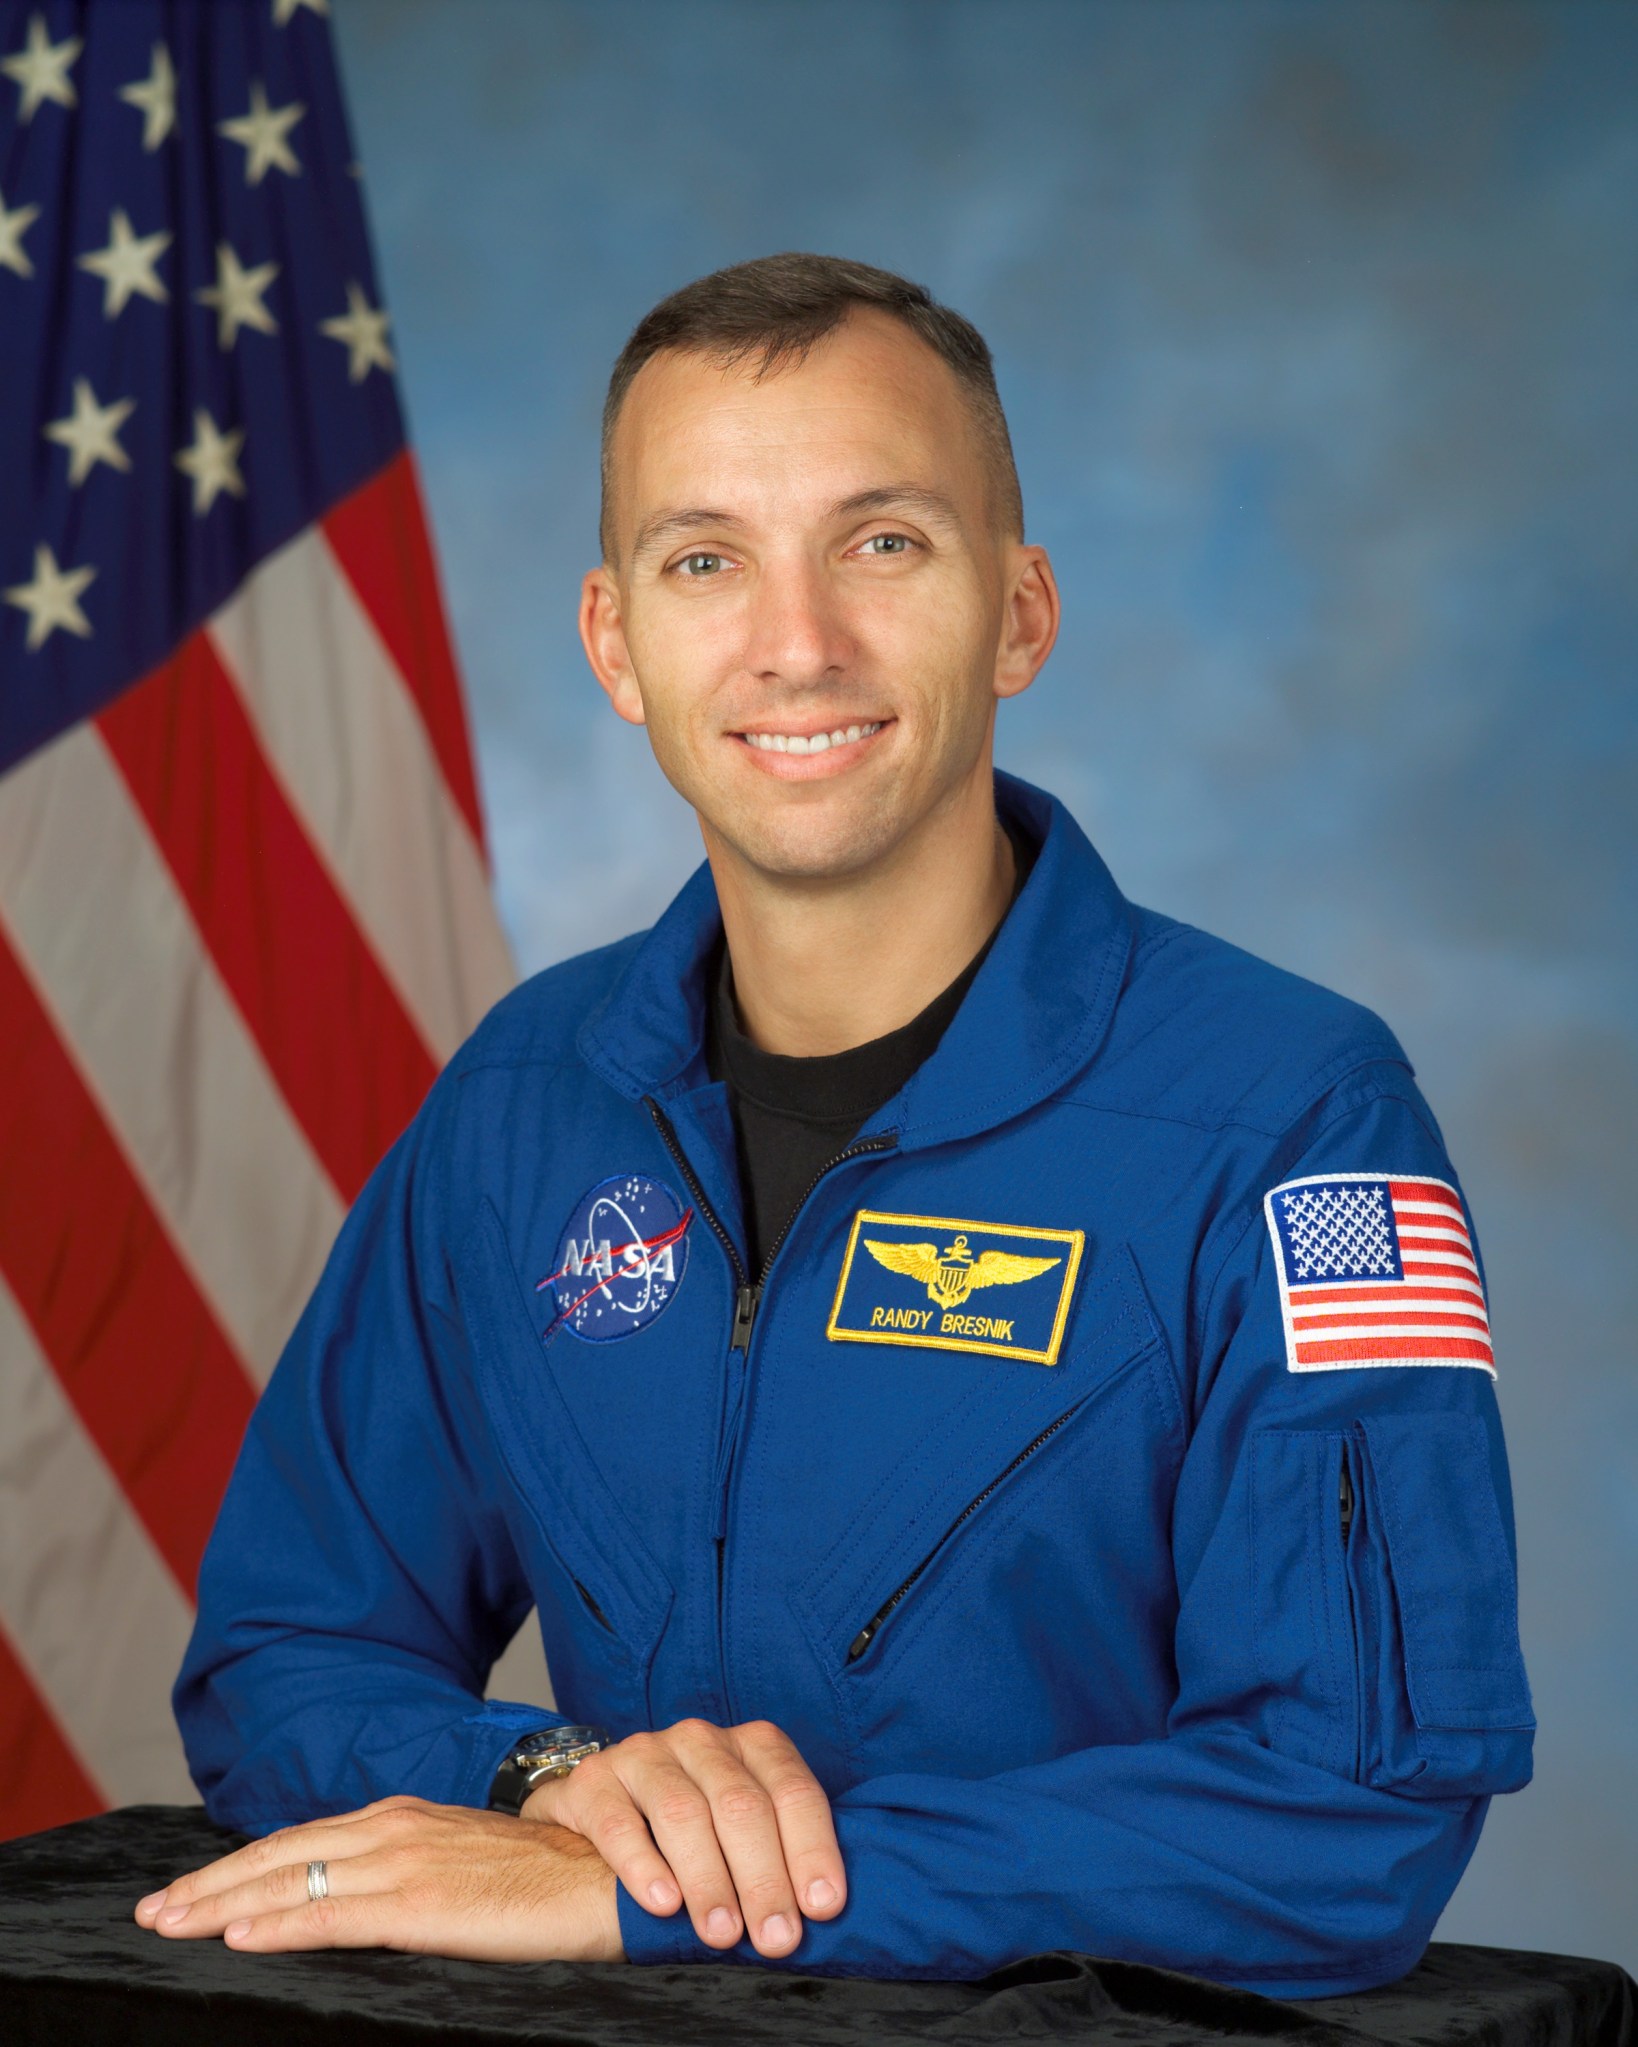 Astronaut Randy Bresnik